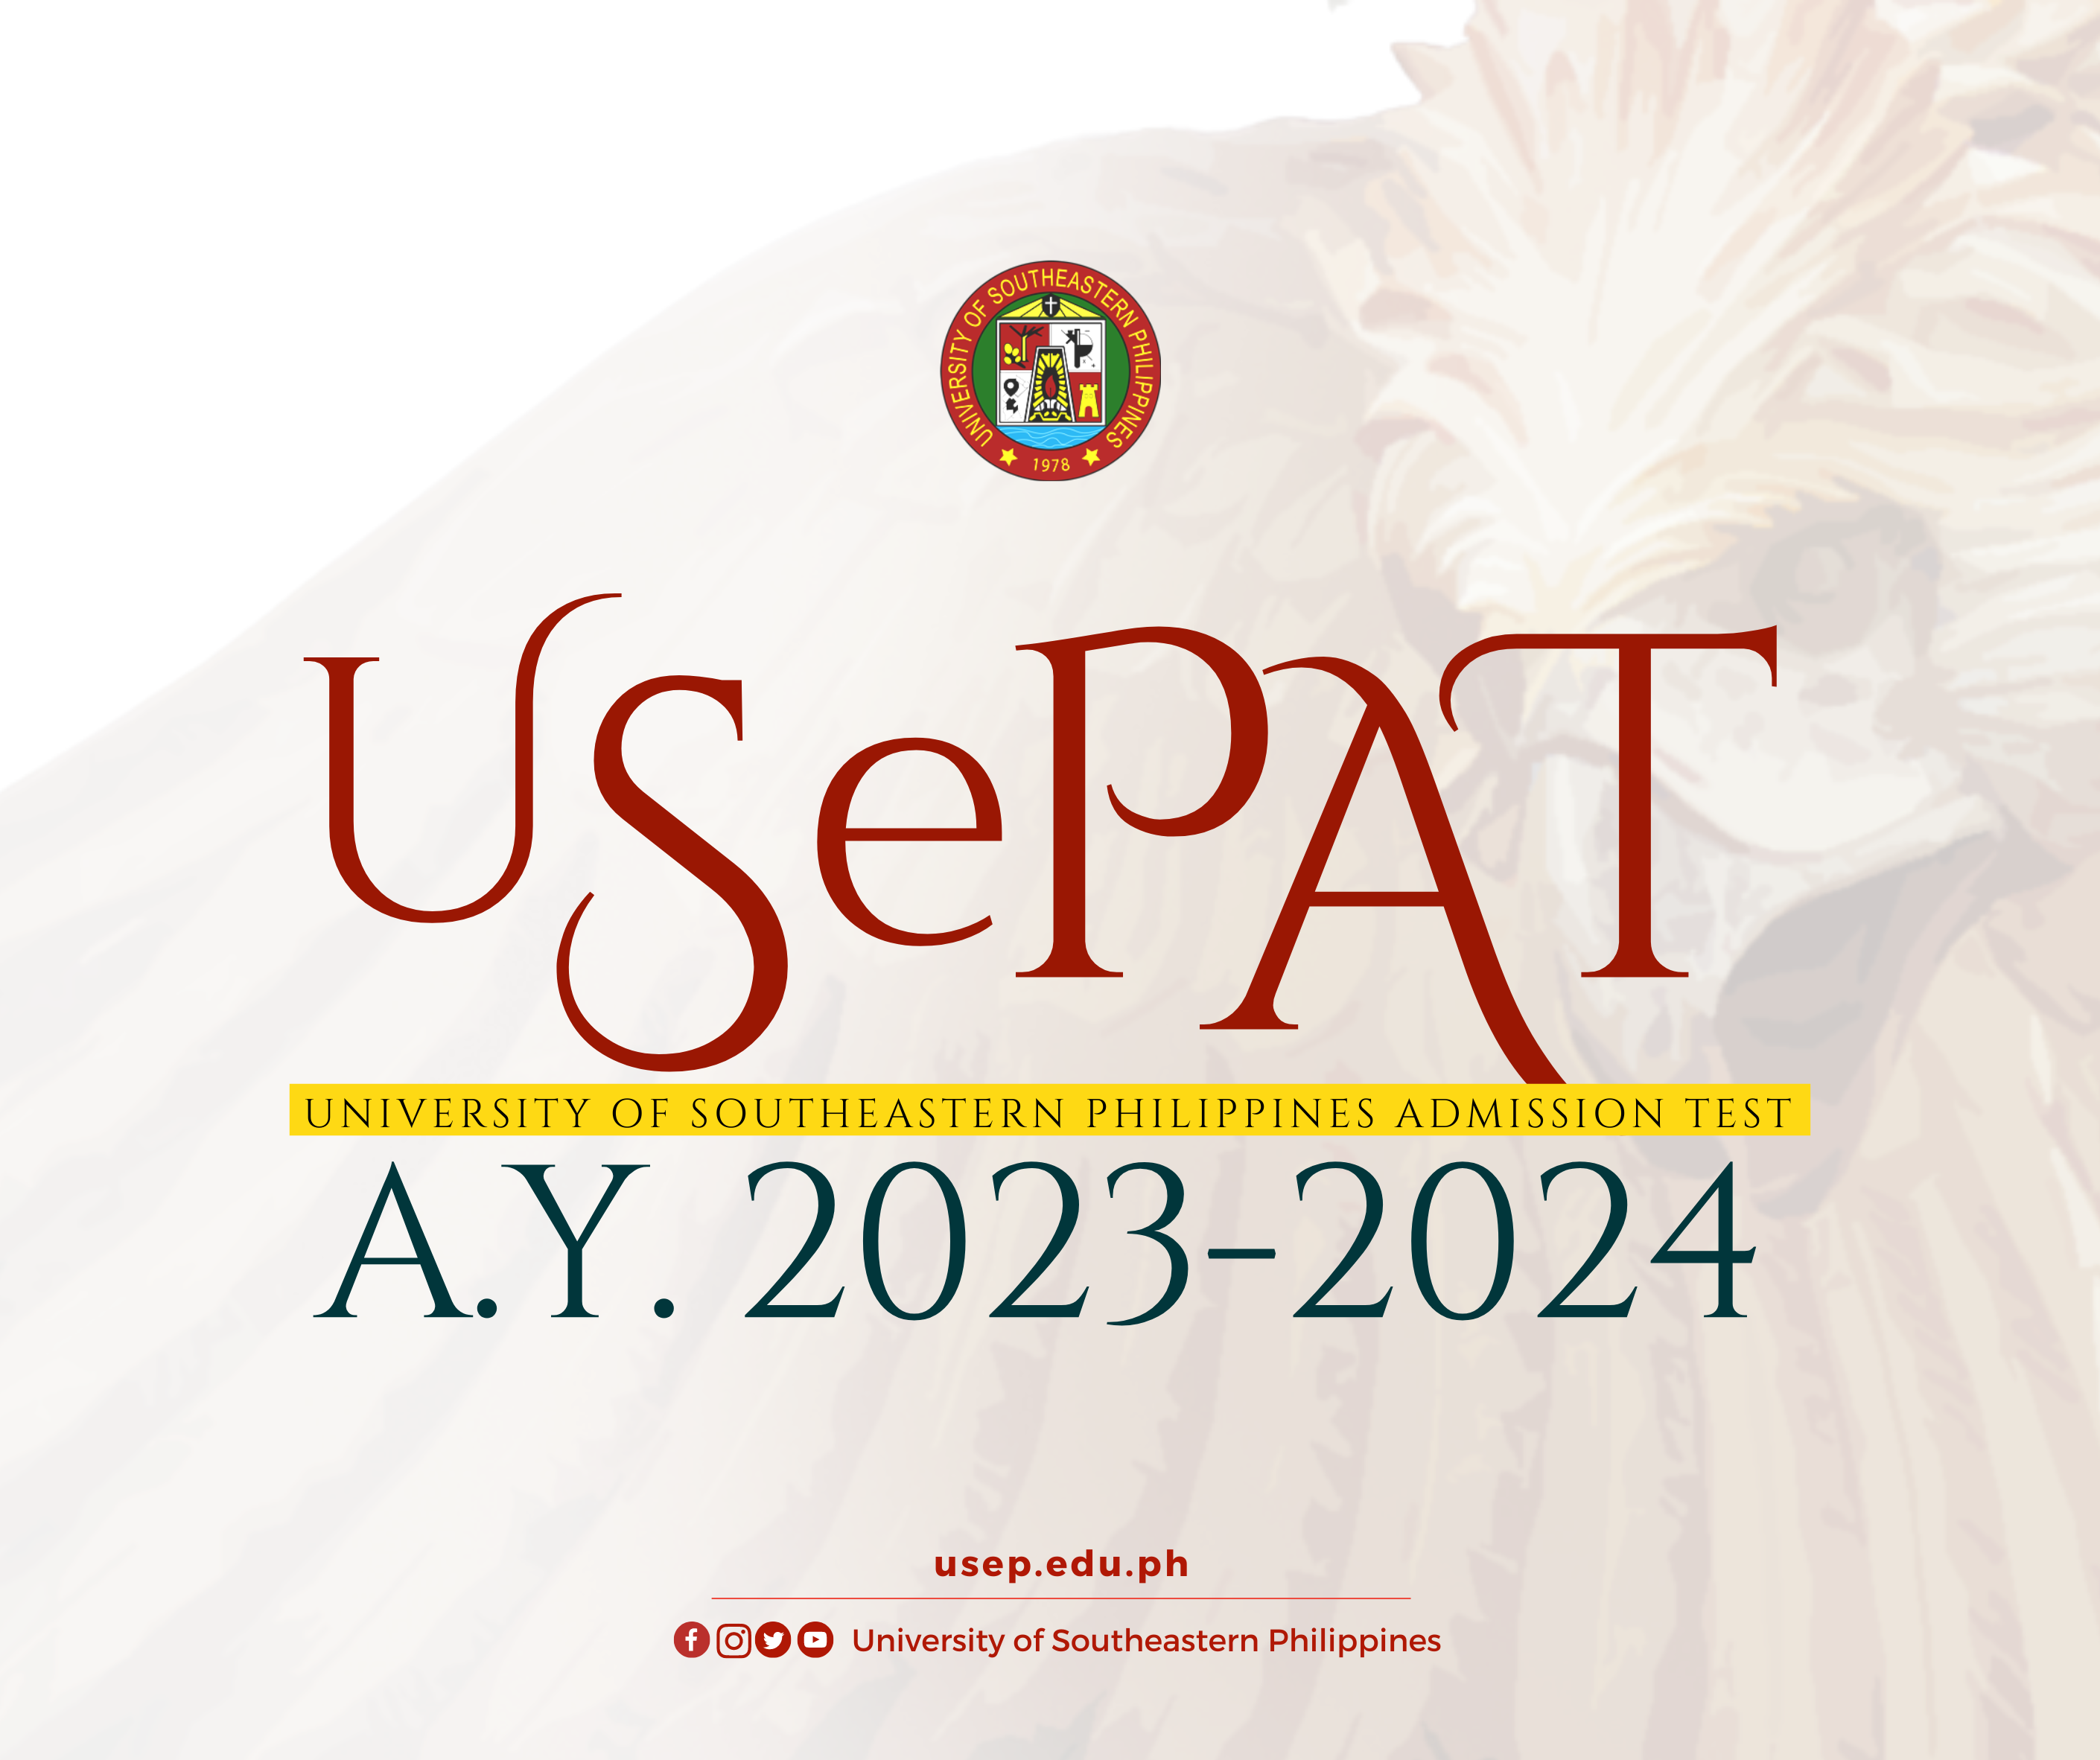 USeP Admission Test (USePAT) for Academic Year 2023-2024